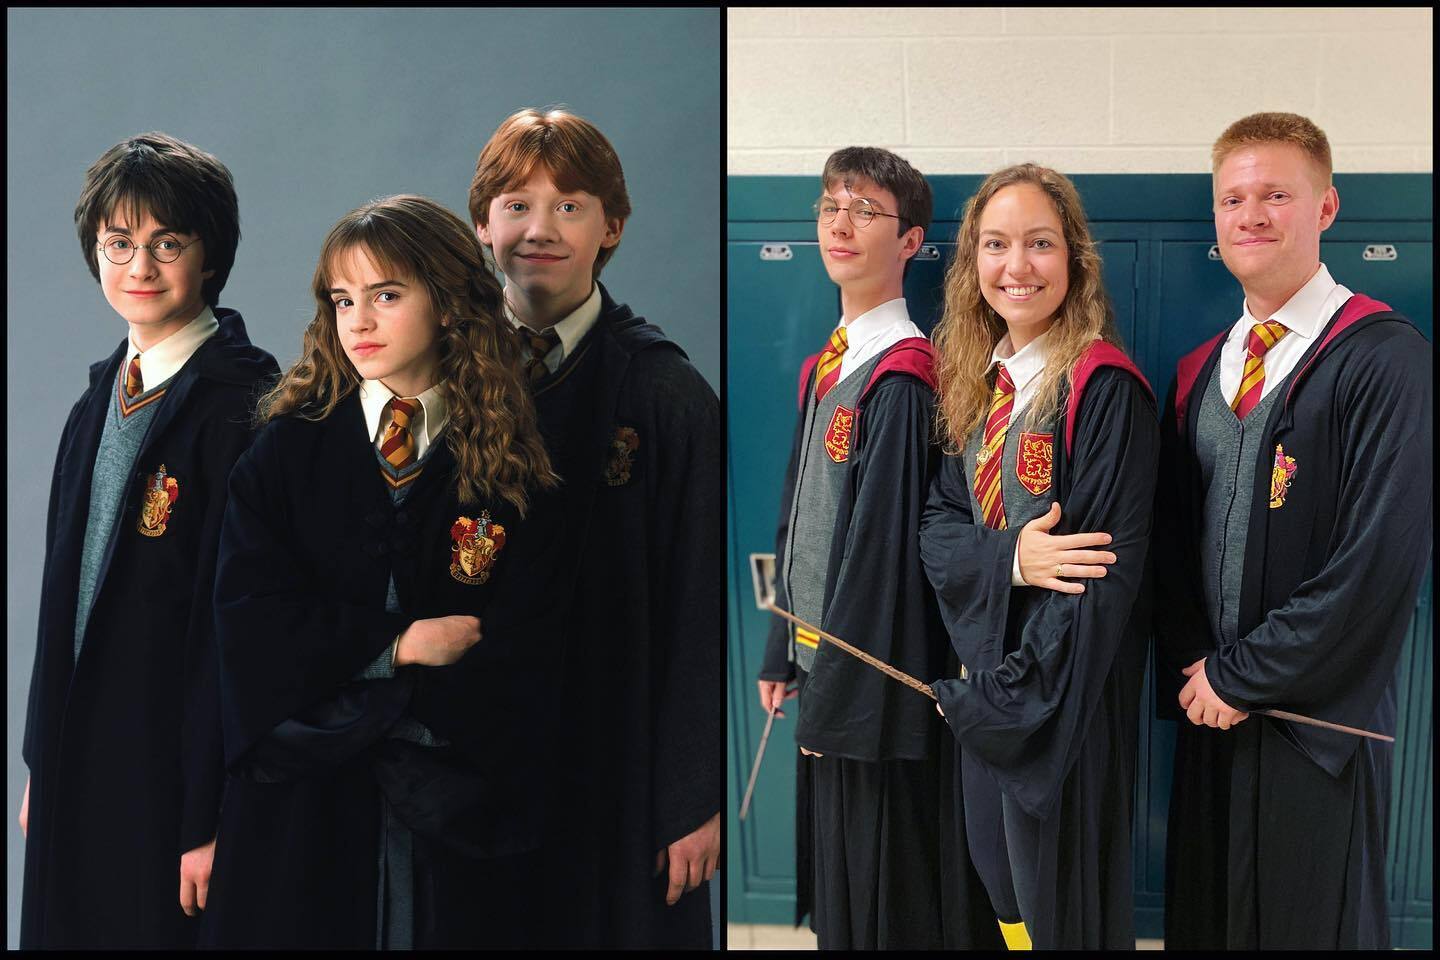 Lauren Kelly with a few Hogwarts classmates